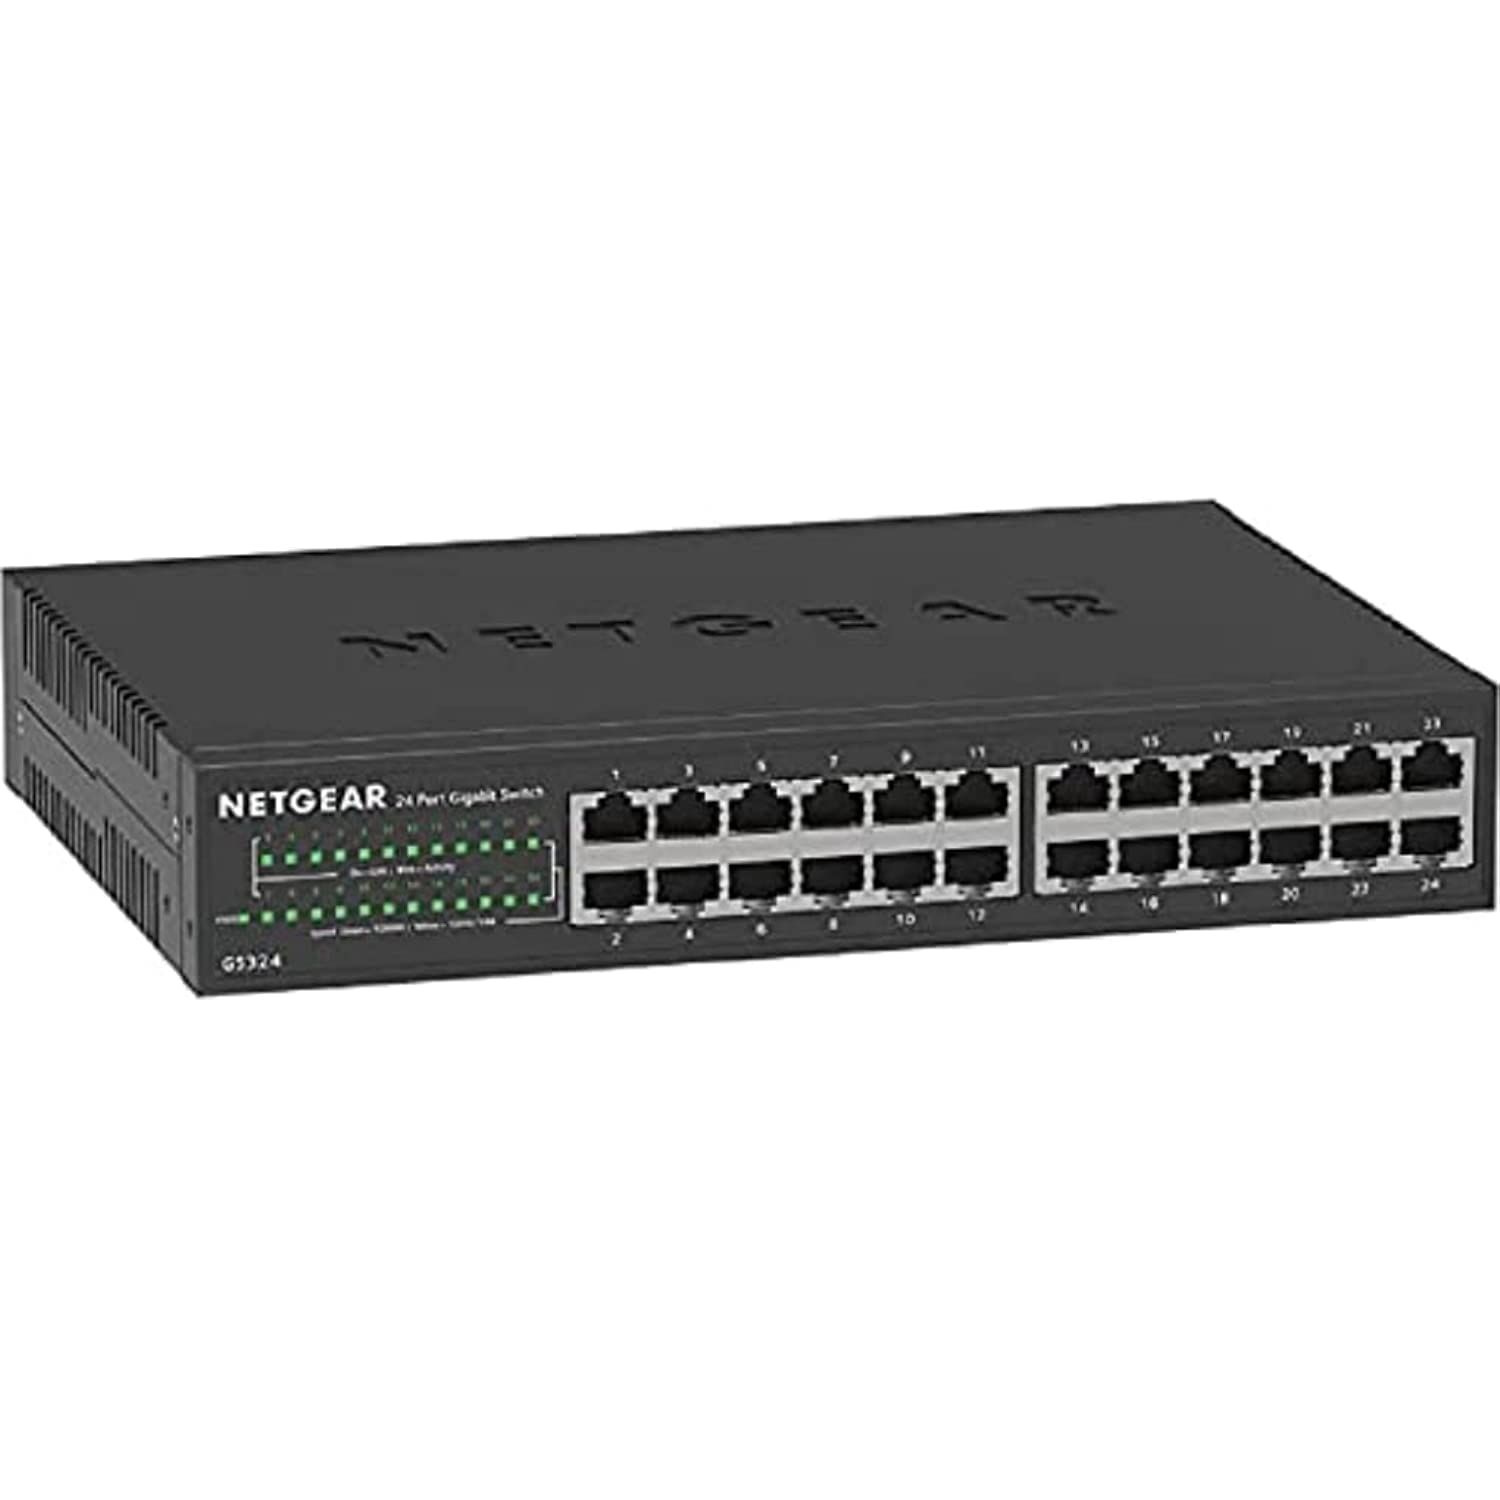 NETgEAR 24 Port gigabit Ethernet Unmanaged Network Switch (gS324) - Desktop, Wall, or Rackmount, Silent Operation, Ethernet Spli